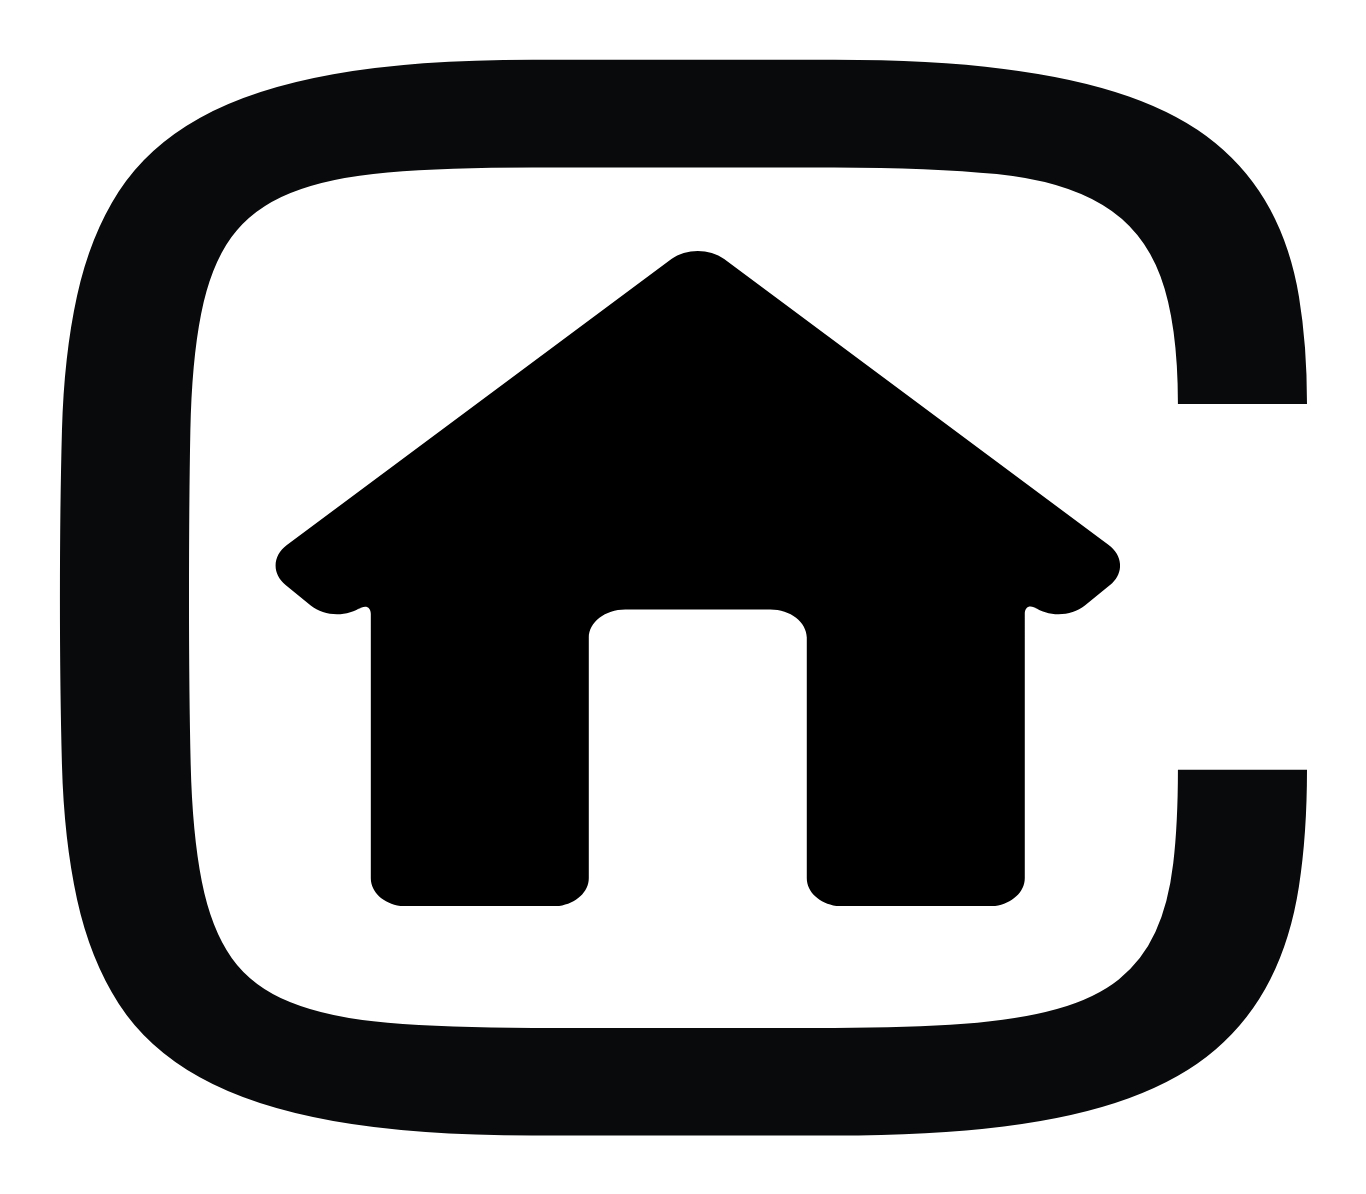 Caliber Home Improvements, LLC Logo